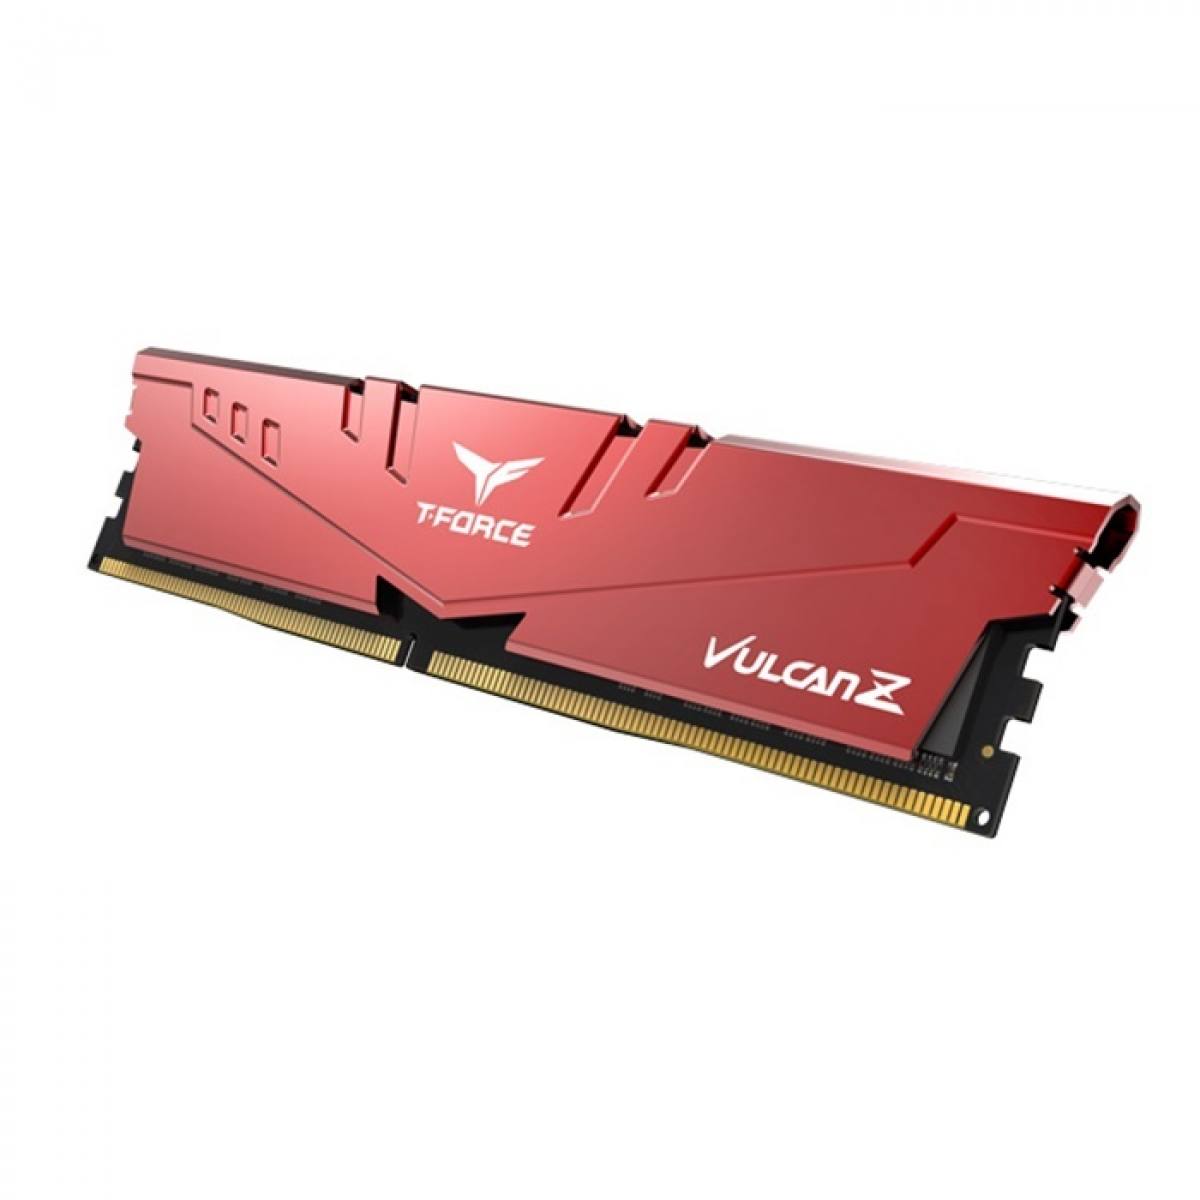 RAM TEAM T-Force Vulcan Z Red | 32GB - DDR4 - 3200MHz